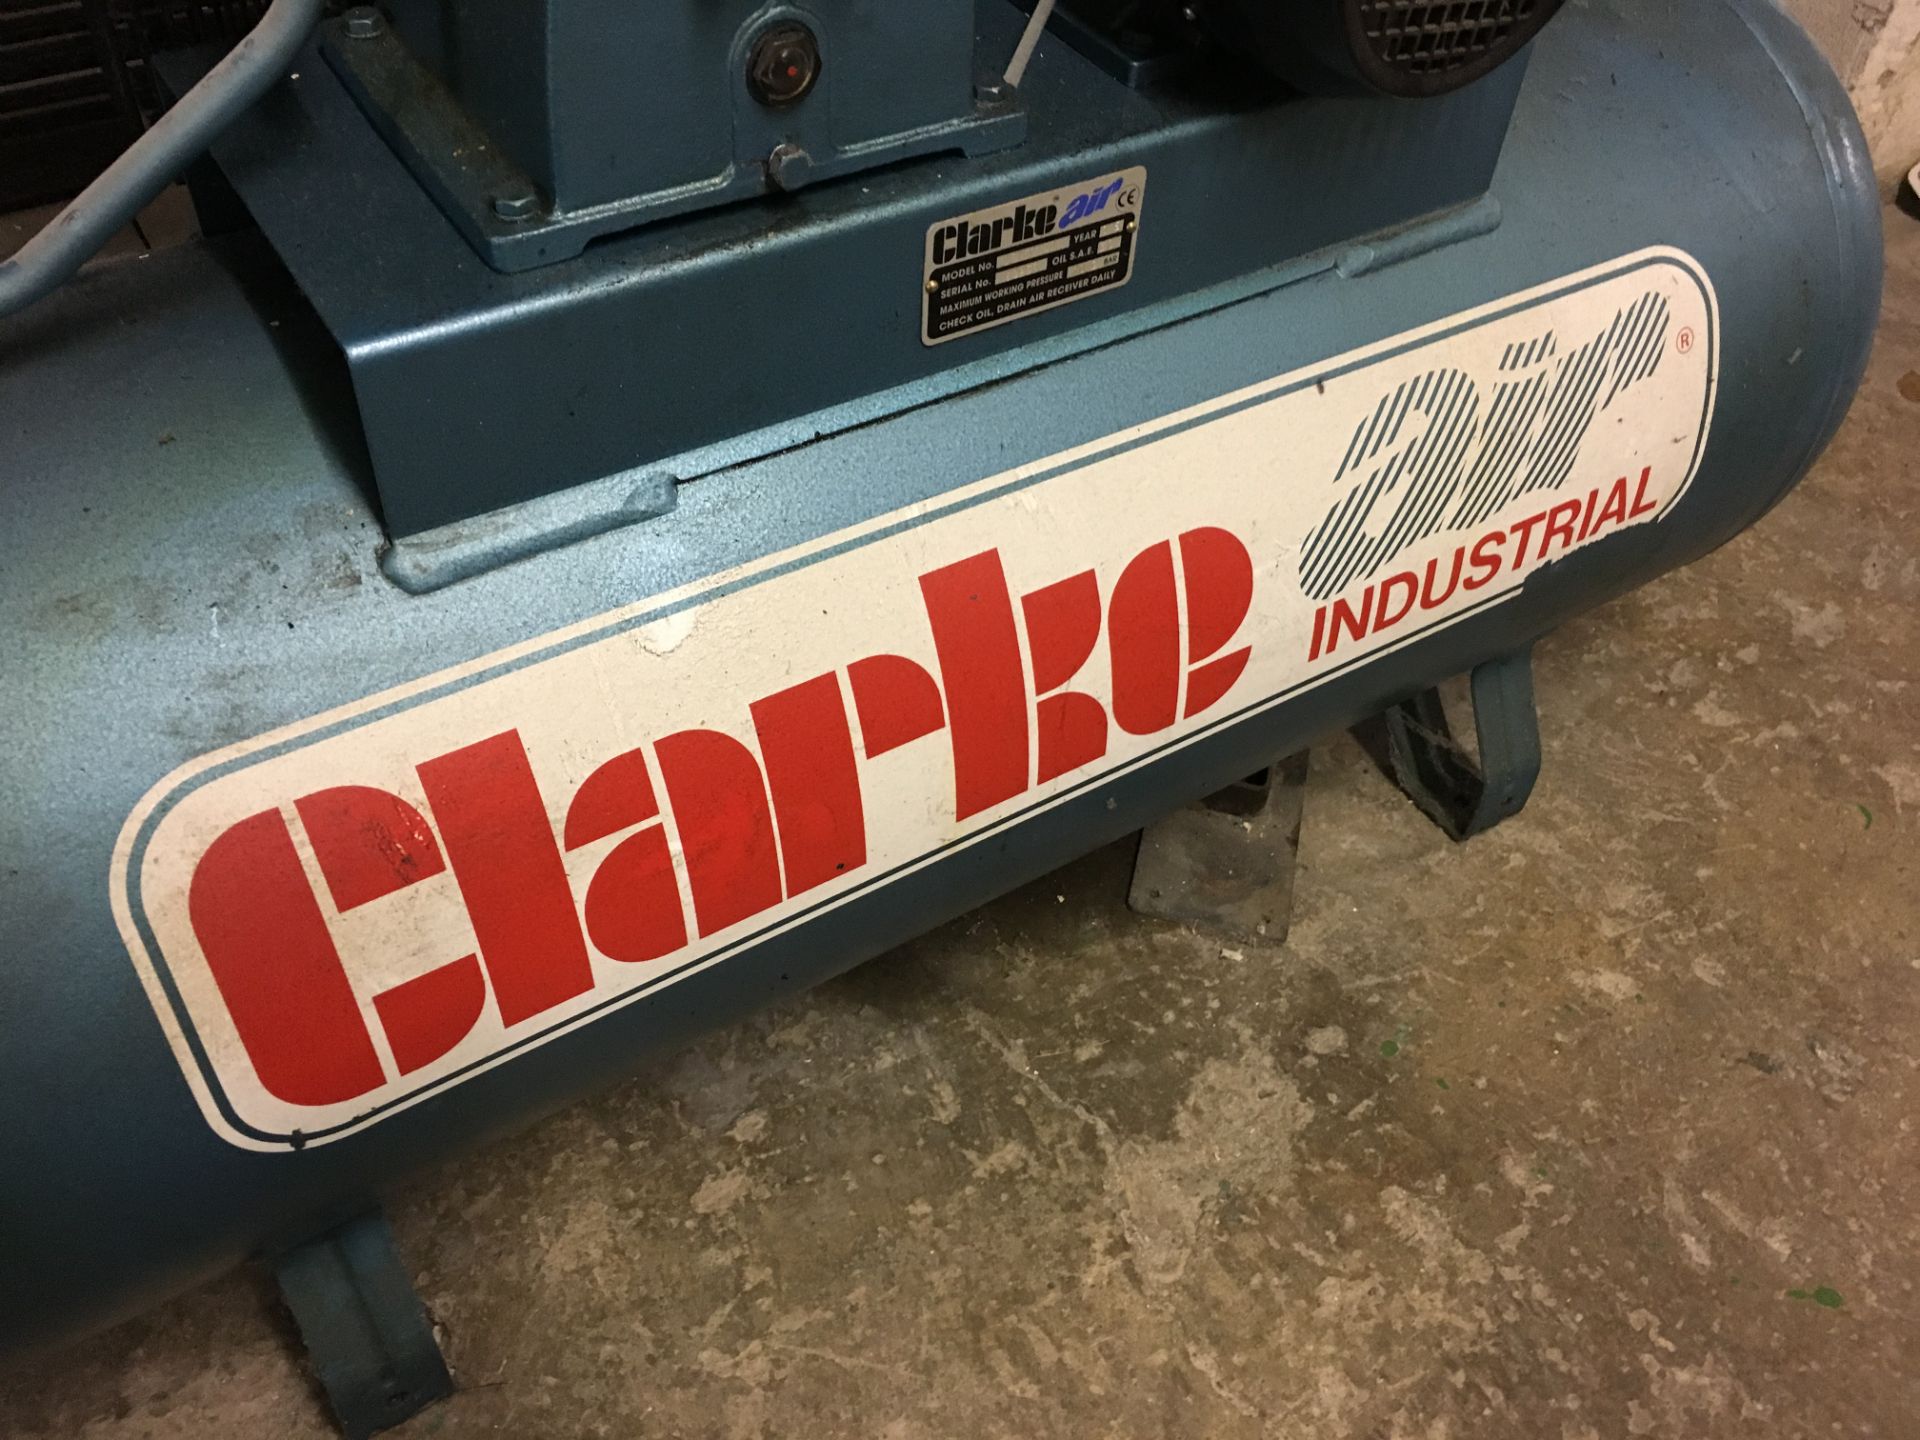 ClarkeAir Industrial Air Compressor - Spares & Repairs - Image 2 of 6